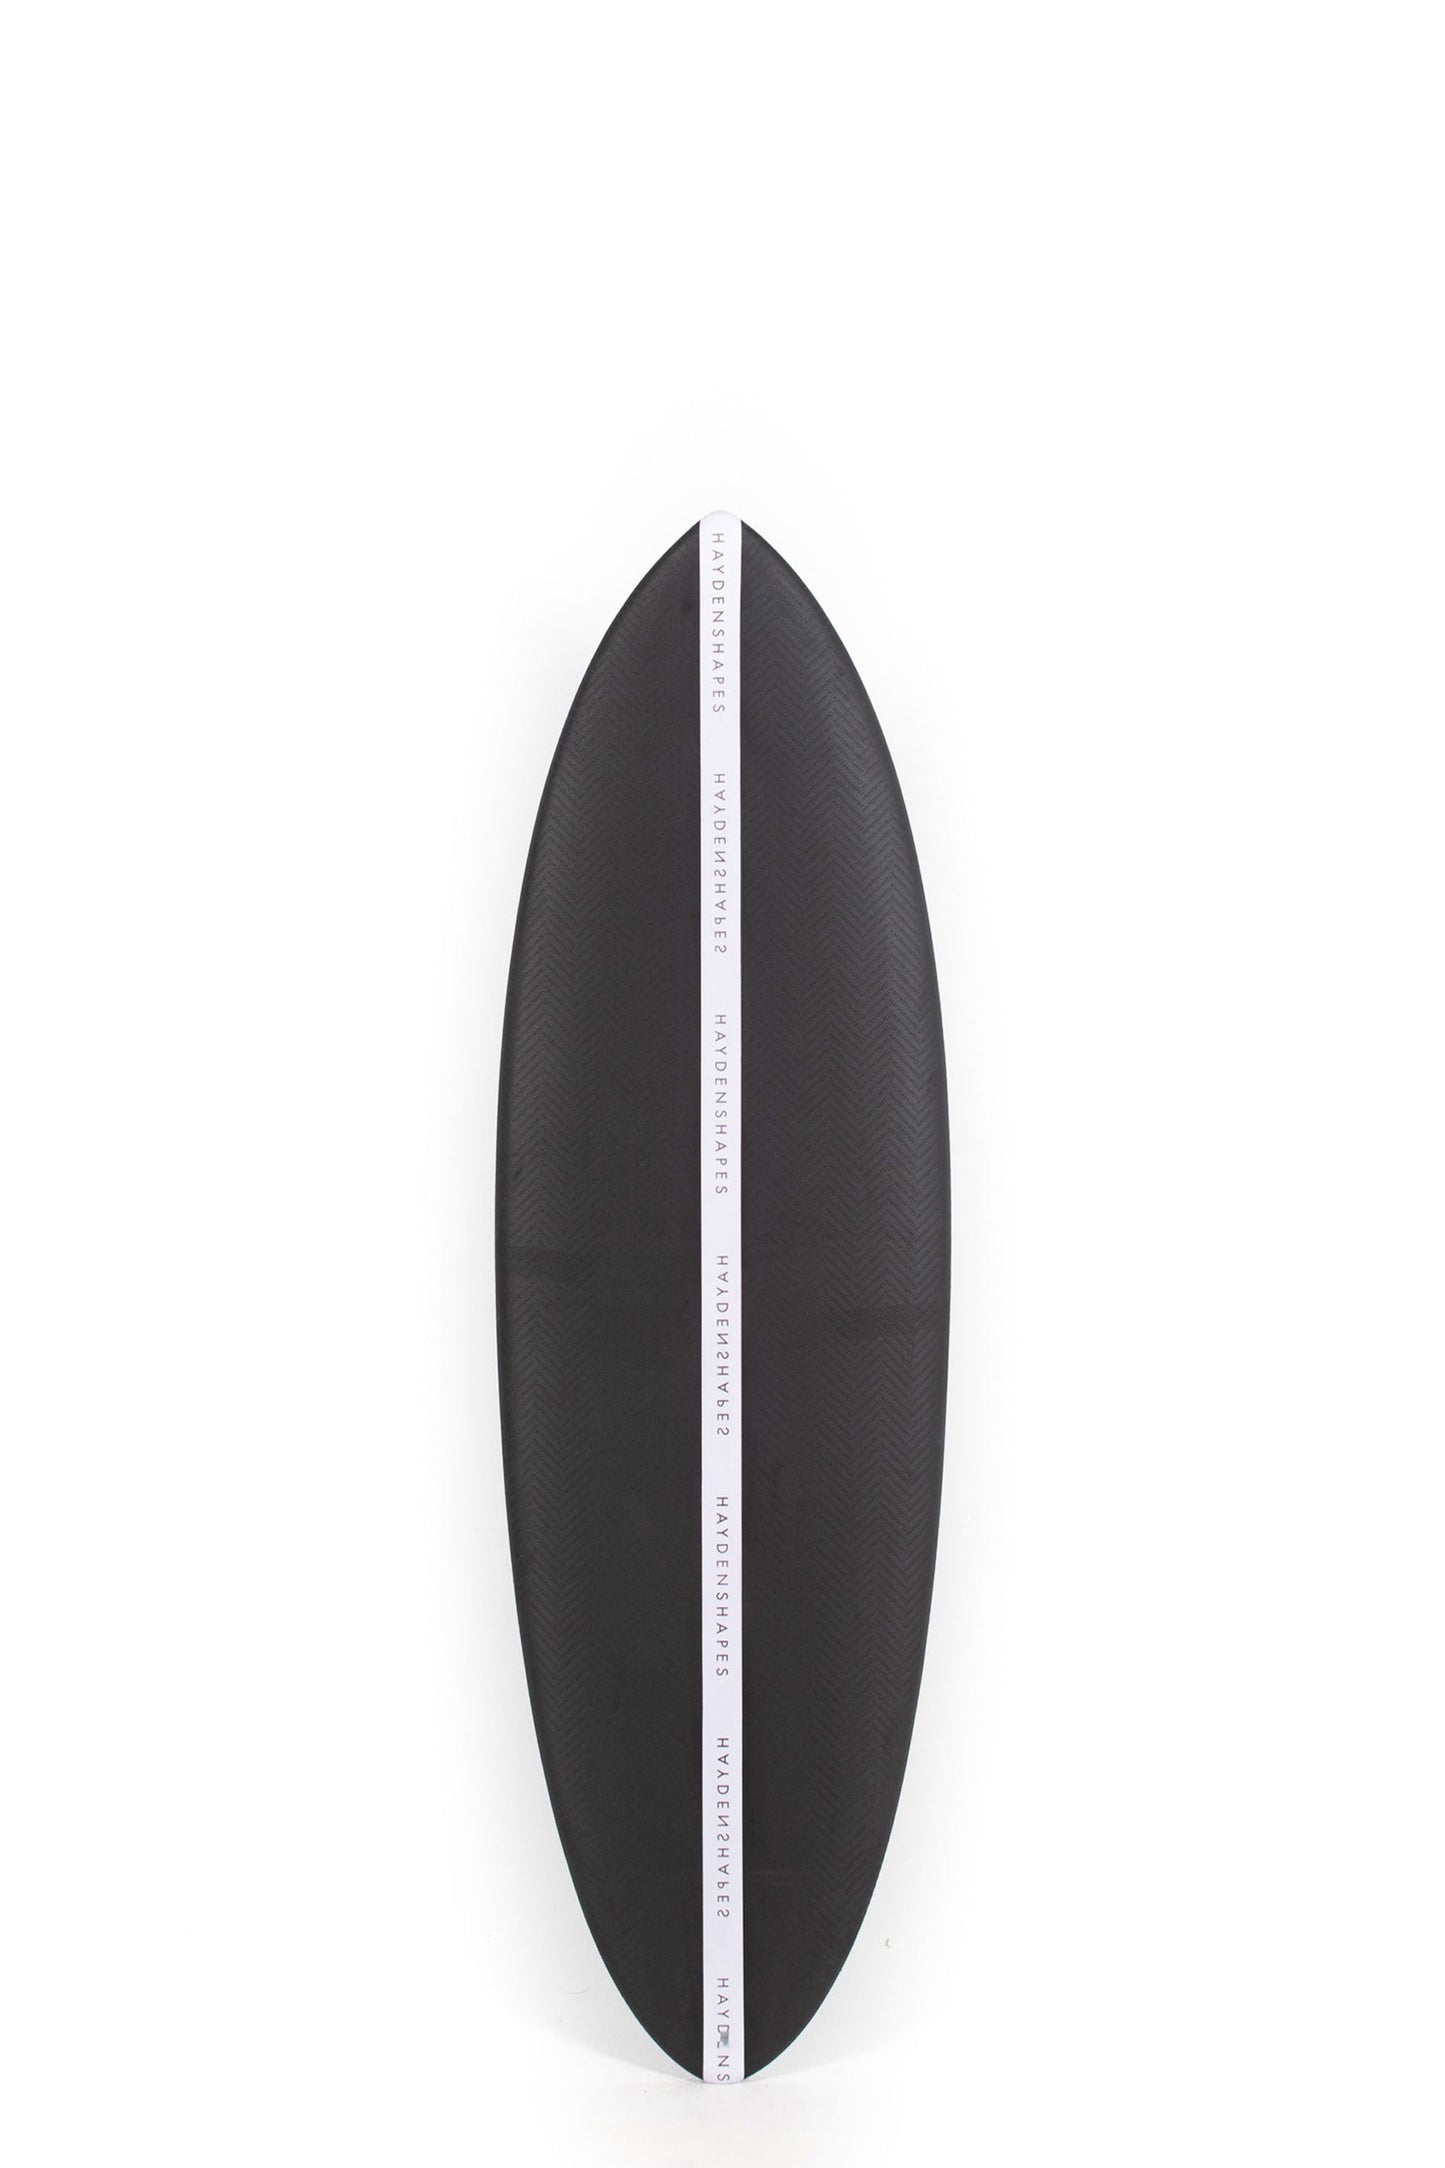 Pukas Surf Shop - HaydenShapes Surfboard - HYPTO KRYPTO SOFT - 6'0" x 20 1/2" x 3" x 41.67L - SOFTHK-INV-FU